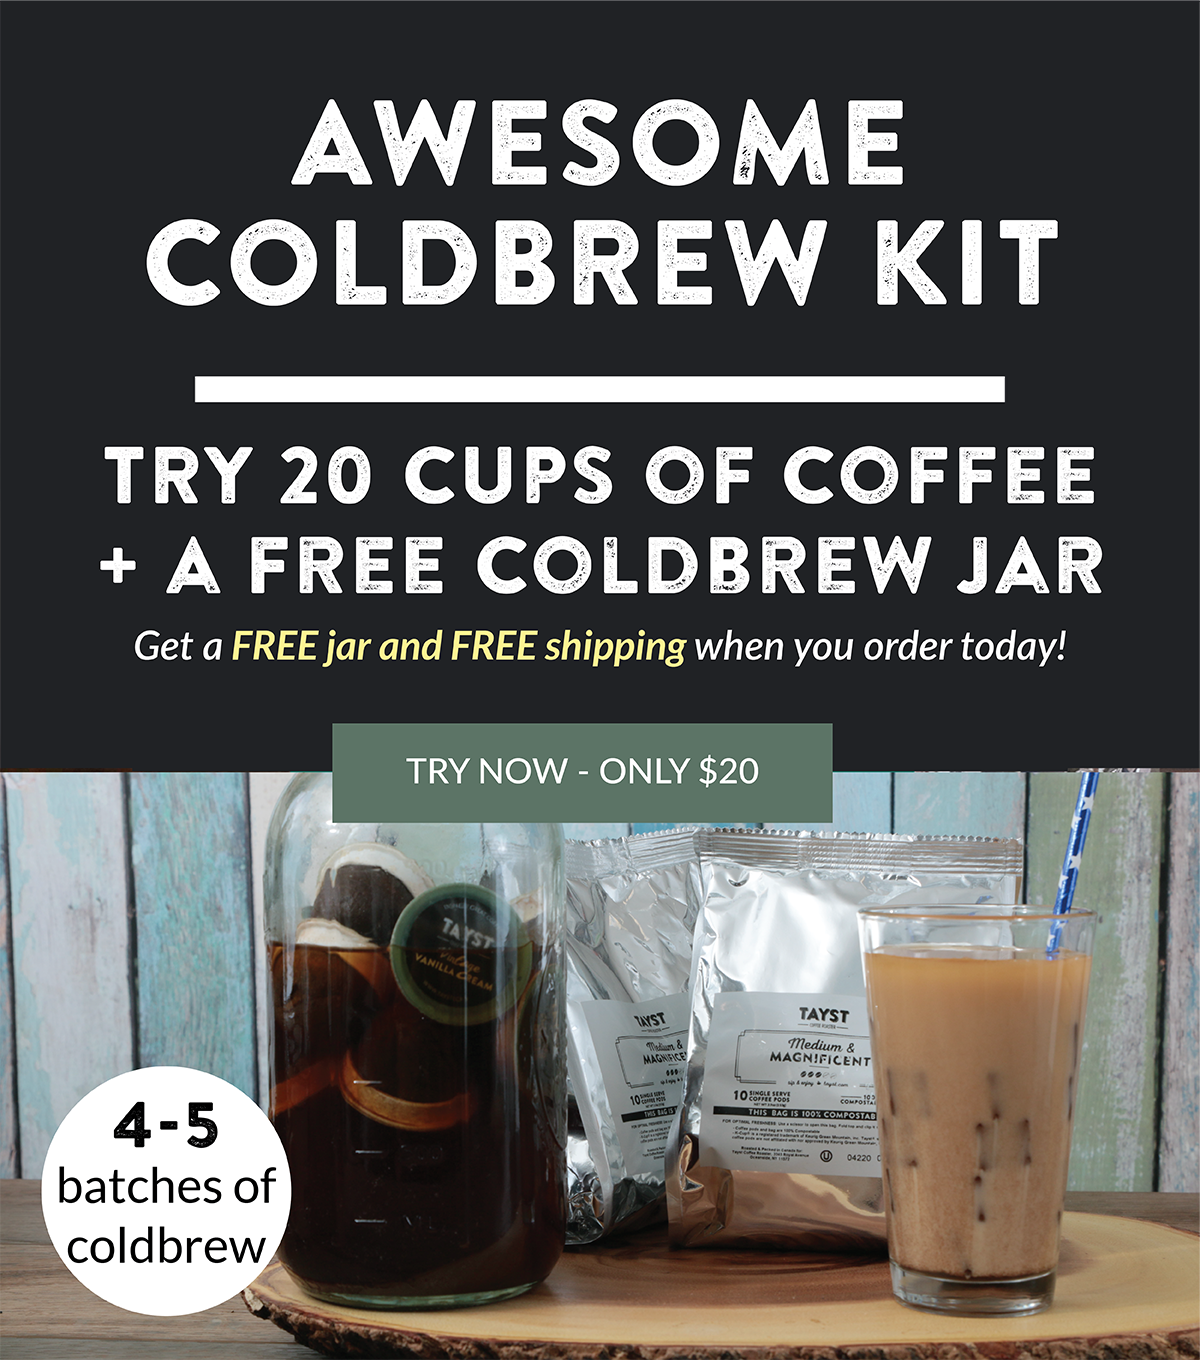 Original CoffeeSock Original 64oz. DIY ColdBrew Kit-CoffeeSock